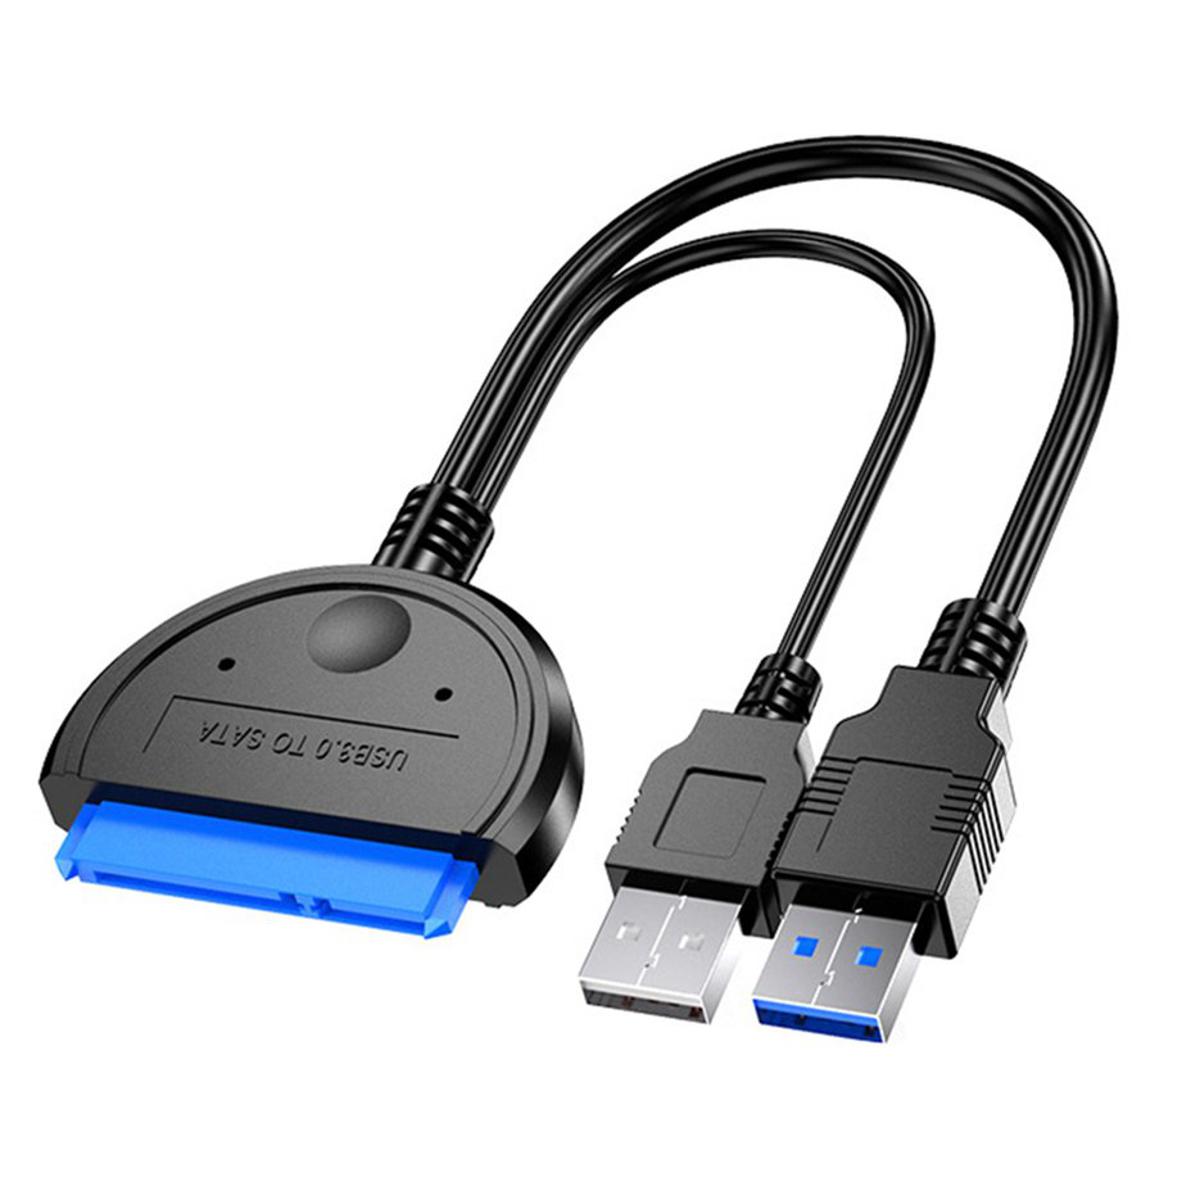 Usb c sata. Кабель переходник SATA USB 3.0 HDD SSD. USB 3 0 SATA 2.5. Кабель SATA USB 2.0 2.0 переходник HDD SSD. SATA - USB 3.0 + USB 2.0 кабель переходник HDD / SSD.